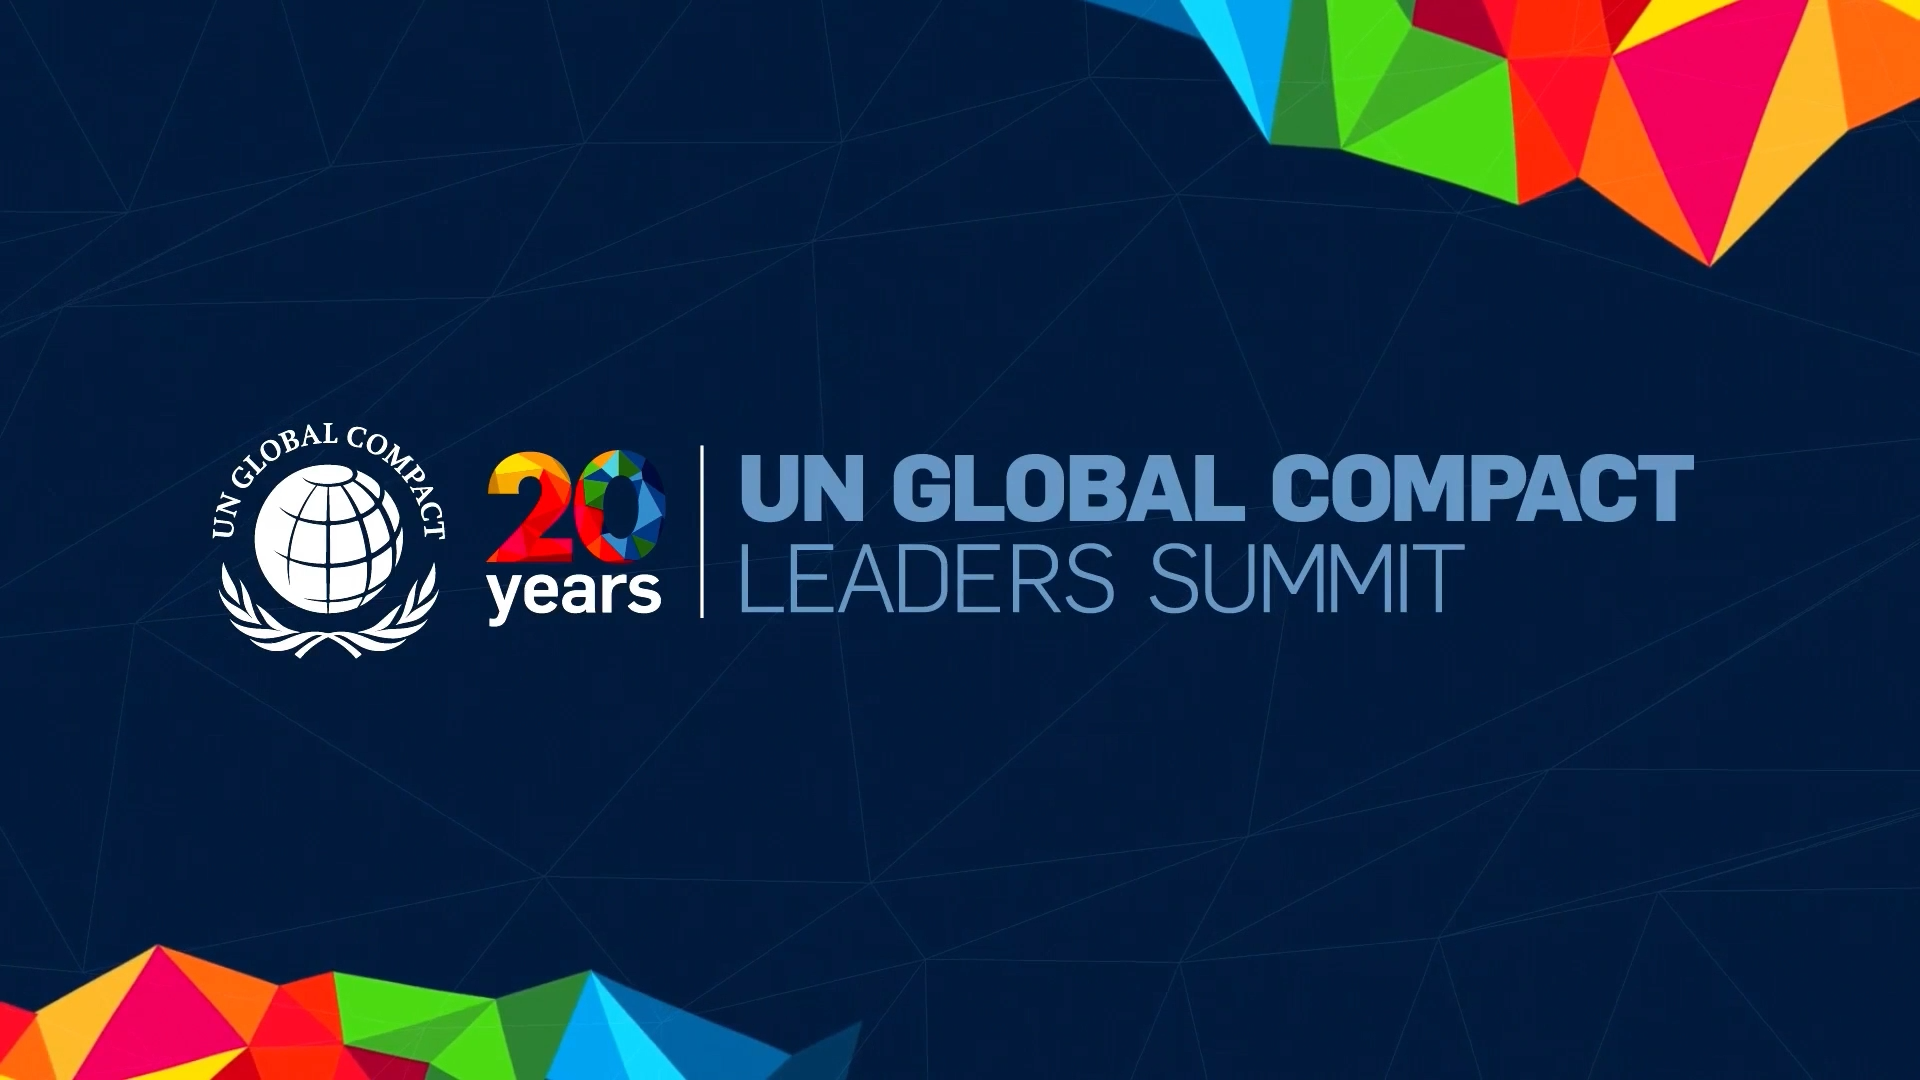 UN Global Compact Virtual Leaders Summit 2020 งานประชุมสุดยอดผู้นำด้านความยั่งยืนบนเวทีโลก